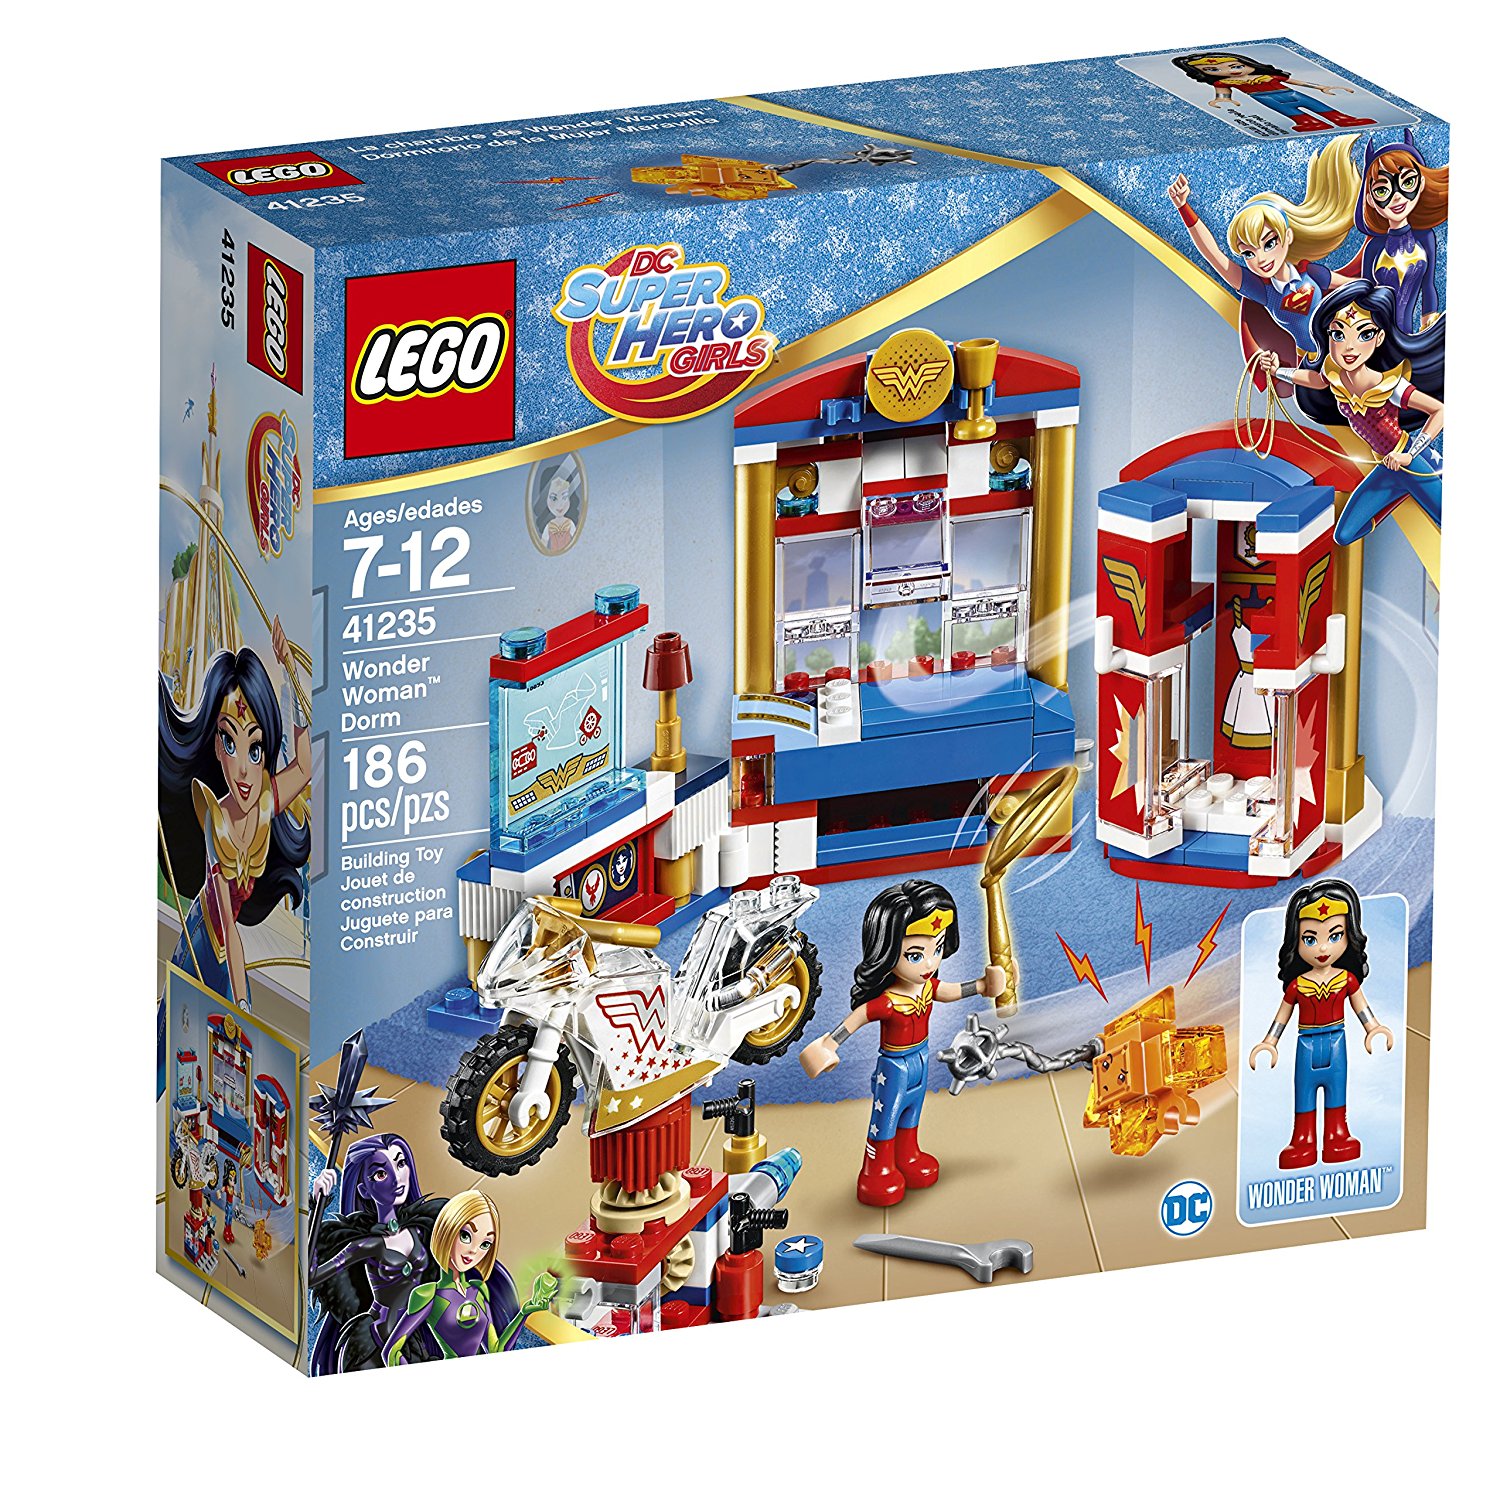 LEGO DC Super Hero Girls Wonder Woman Dorm 41235 – Just $15.99!